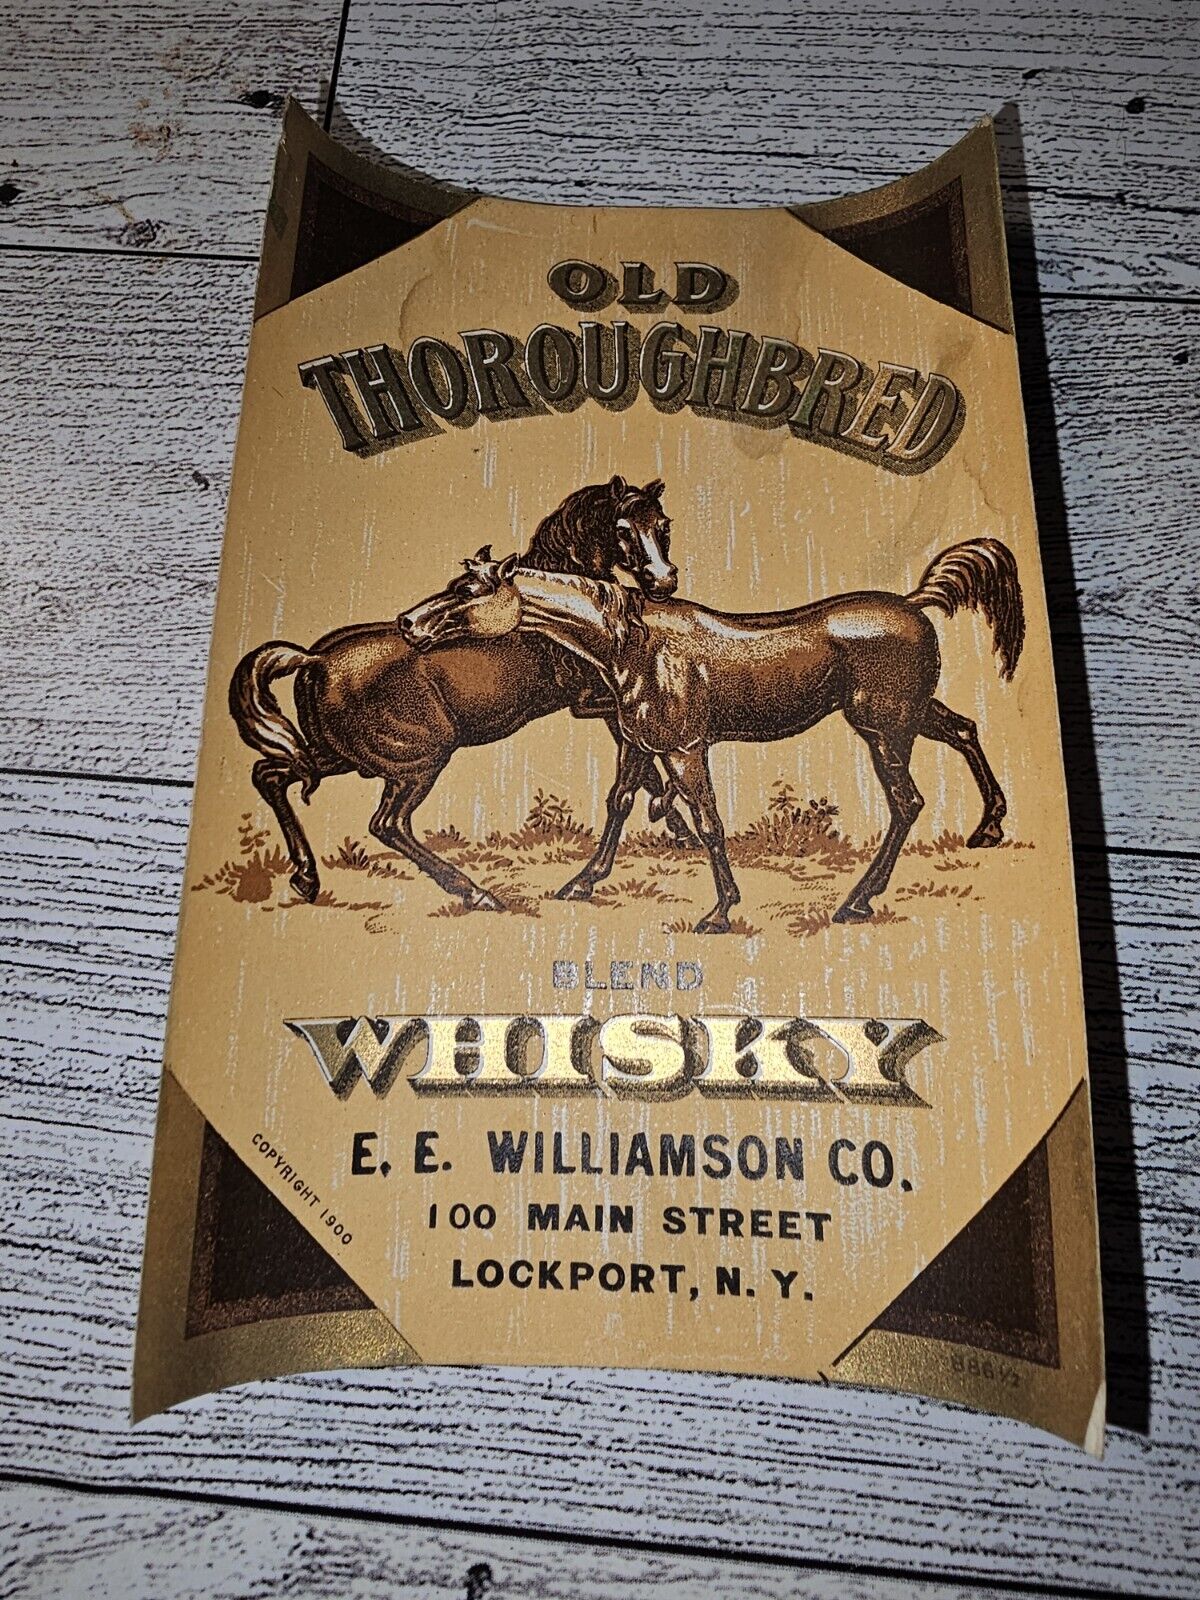 Old Thoroughbred Blend Whisky Label Original Lockport Ny 1900